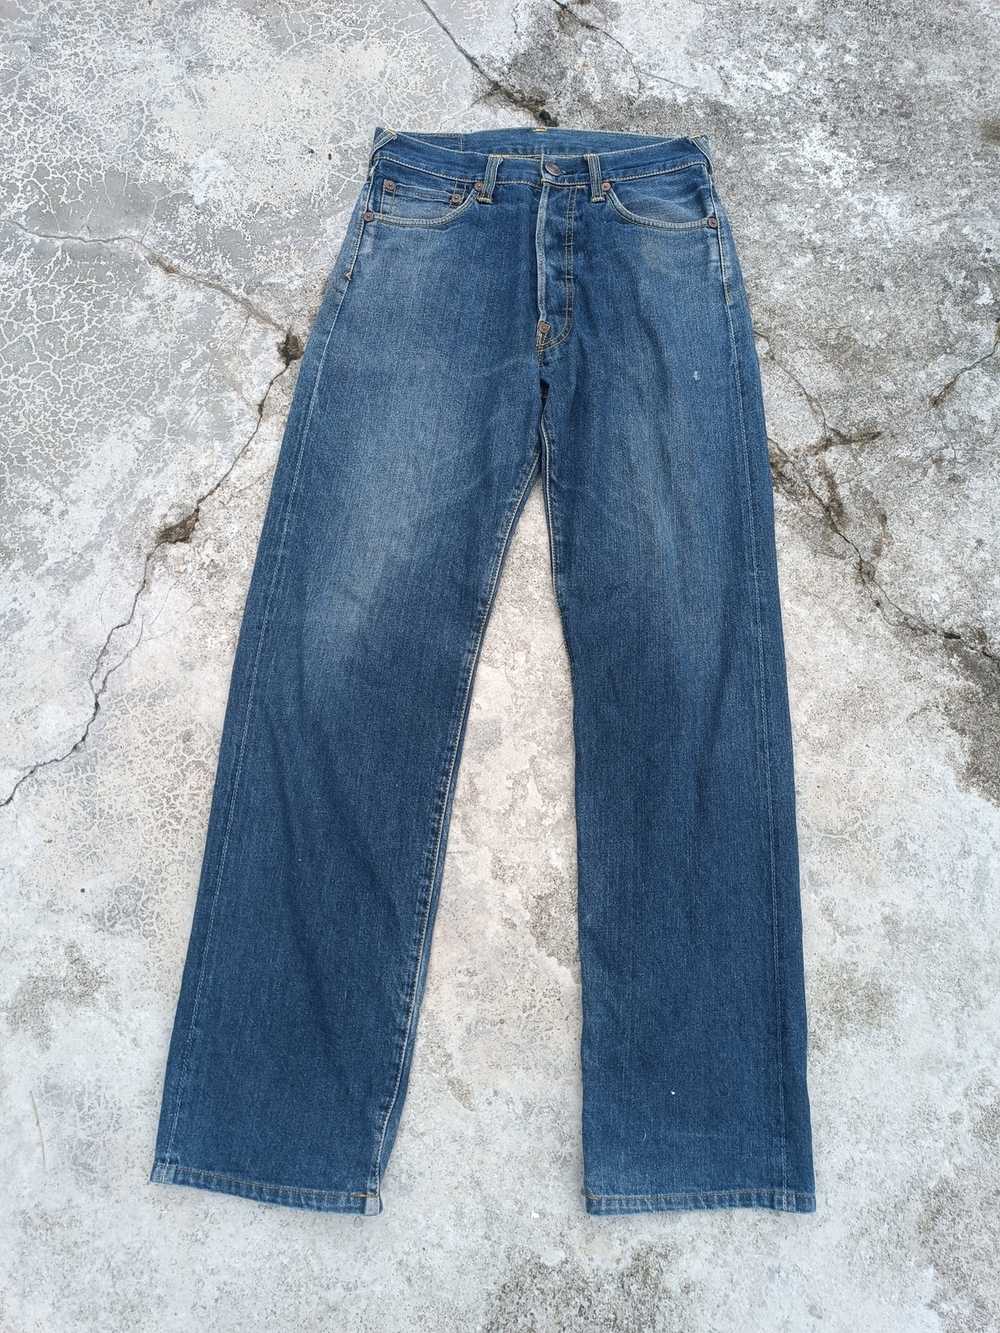 Evisu × Japanese Brand × Vintage Evisu Jeans Vint… - image 12